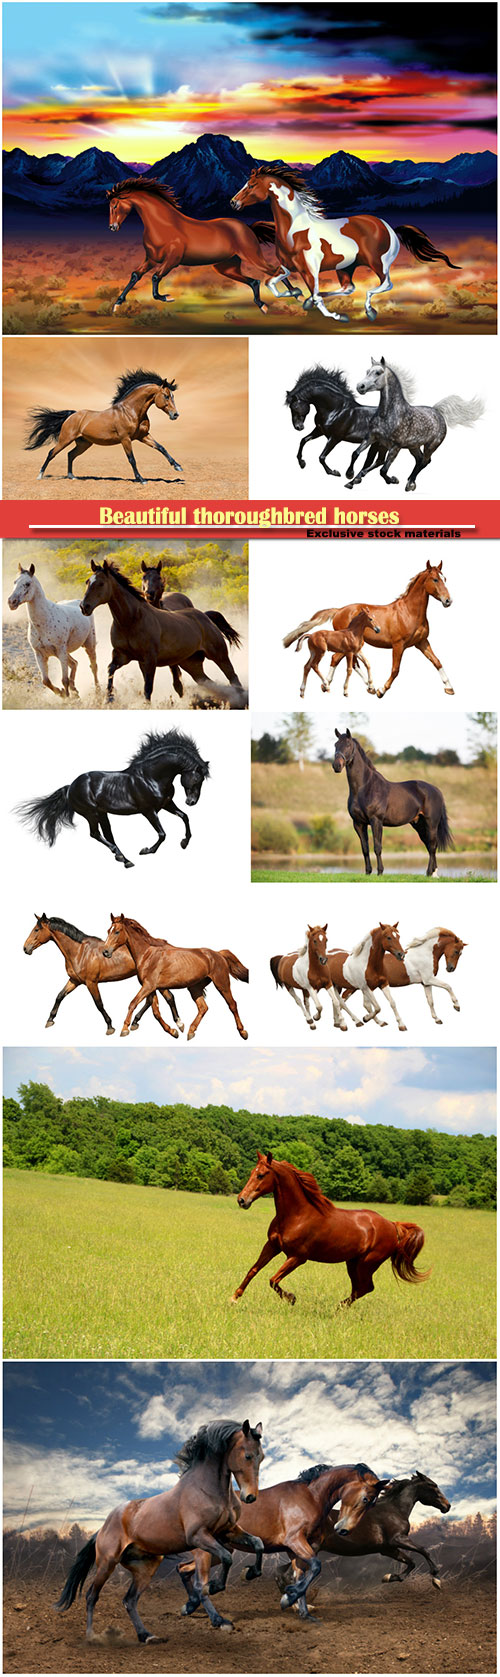 Beautiful thoroughbred horses